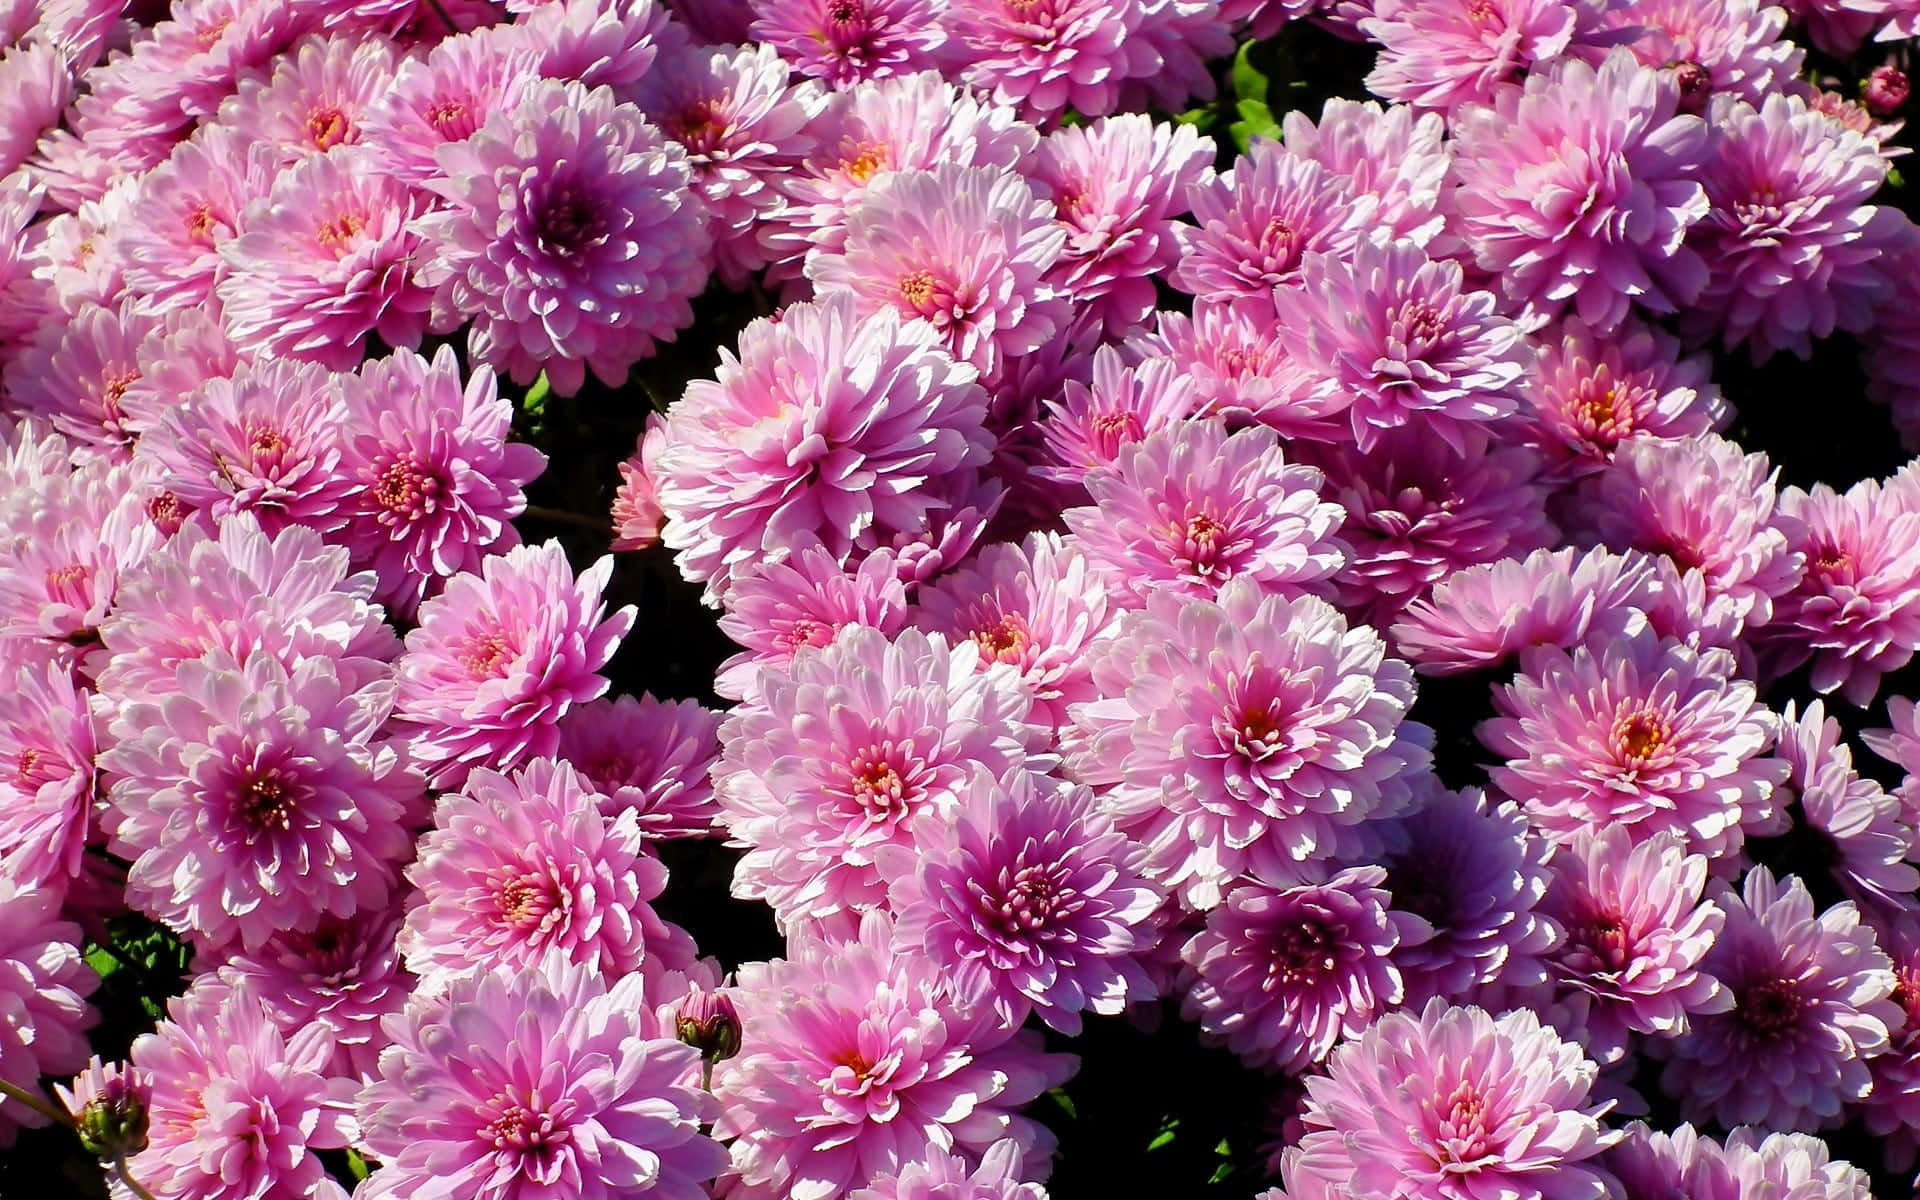 Caption: Elegant Pink Chrysanthemums in Full Bloom Wallpaper